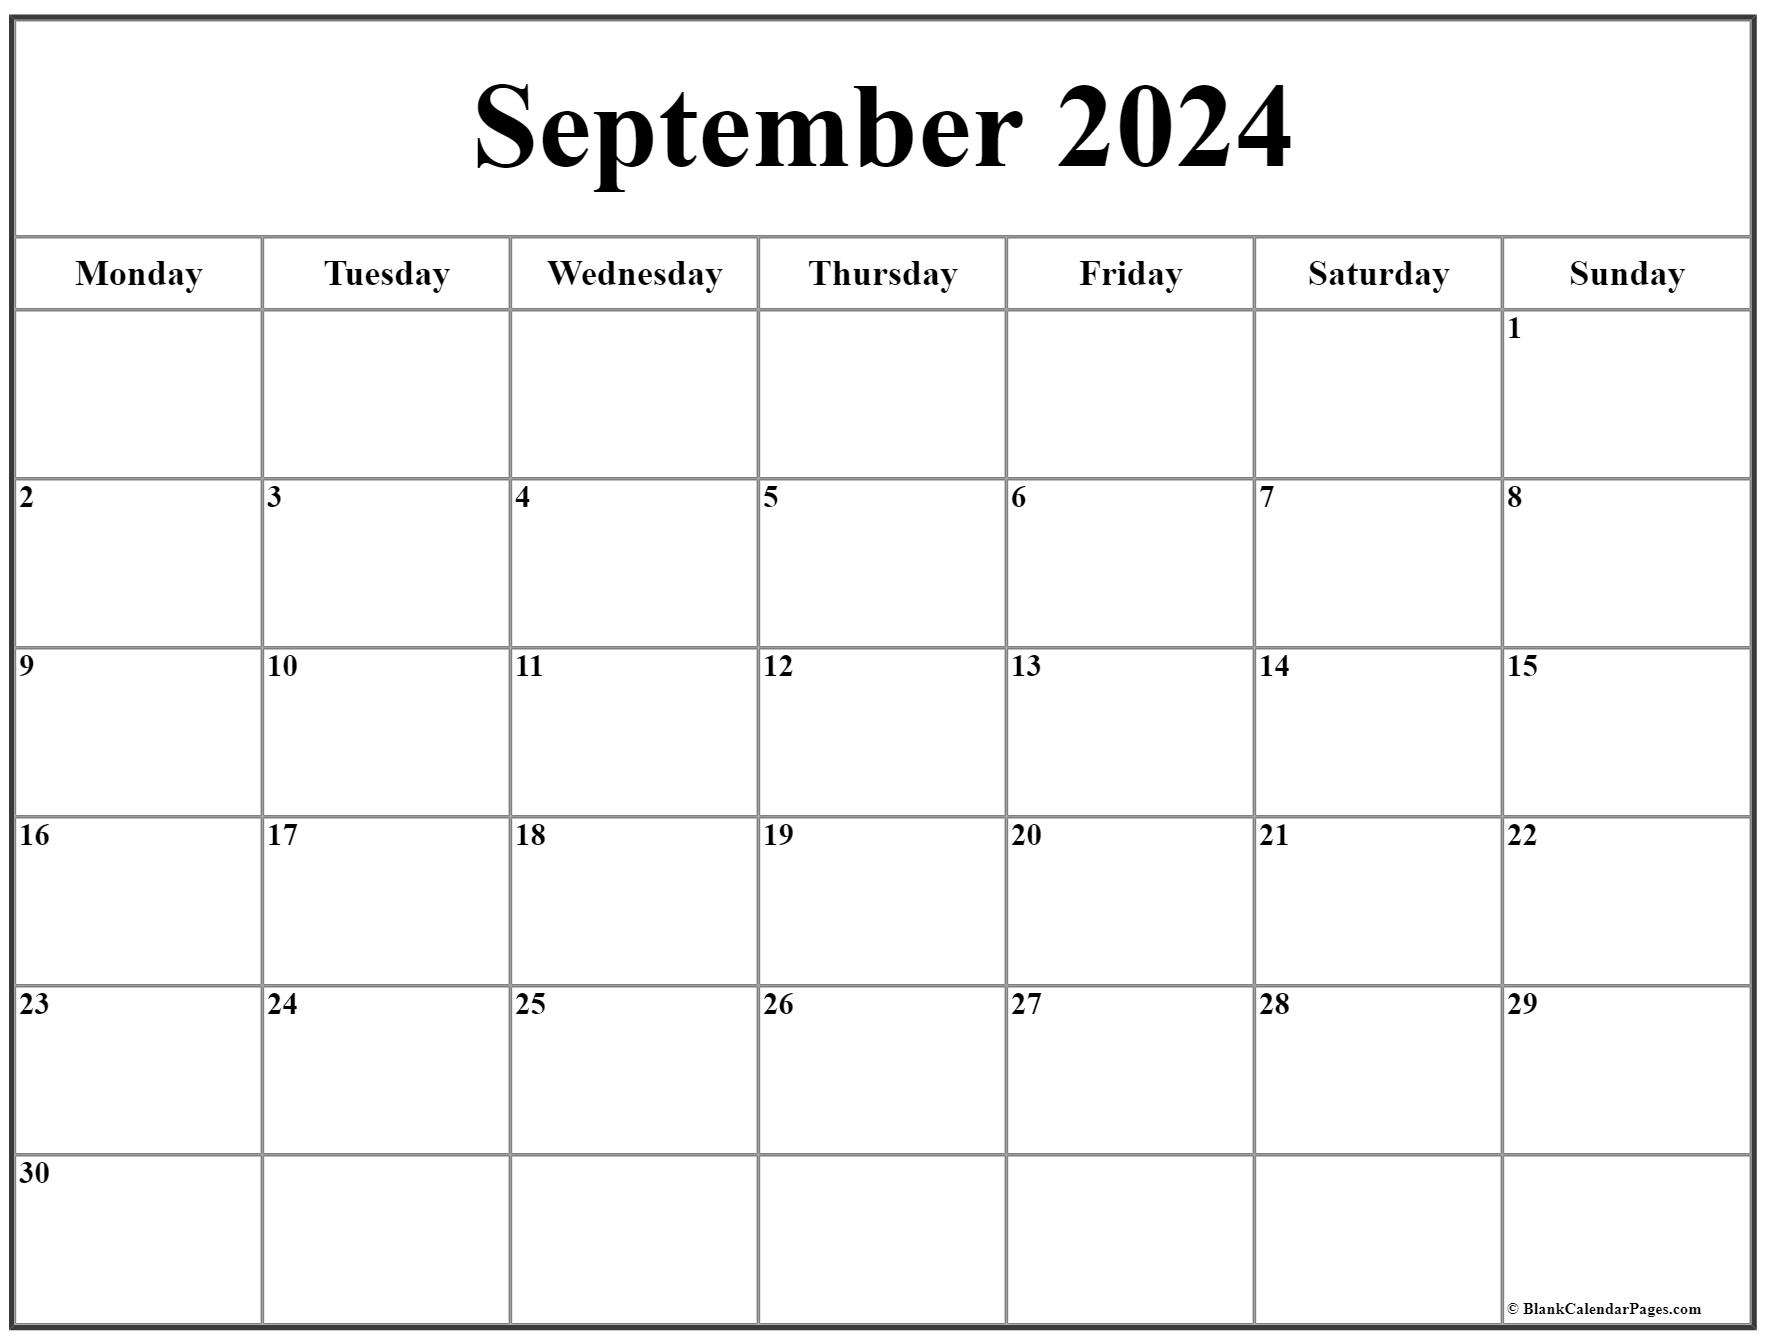 September 2019 Monday Calendar | Monday to Sunday